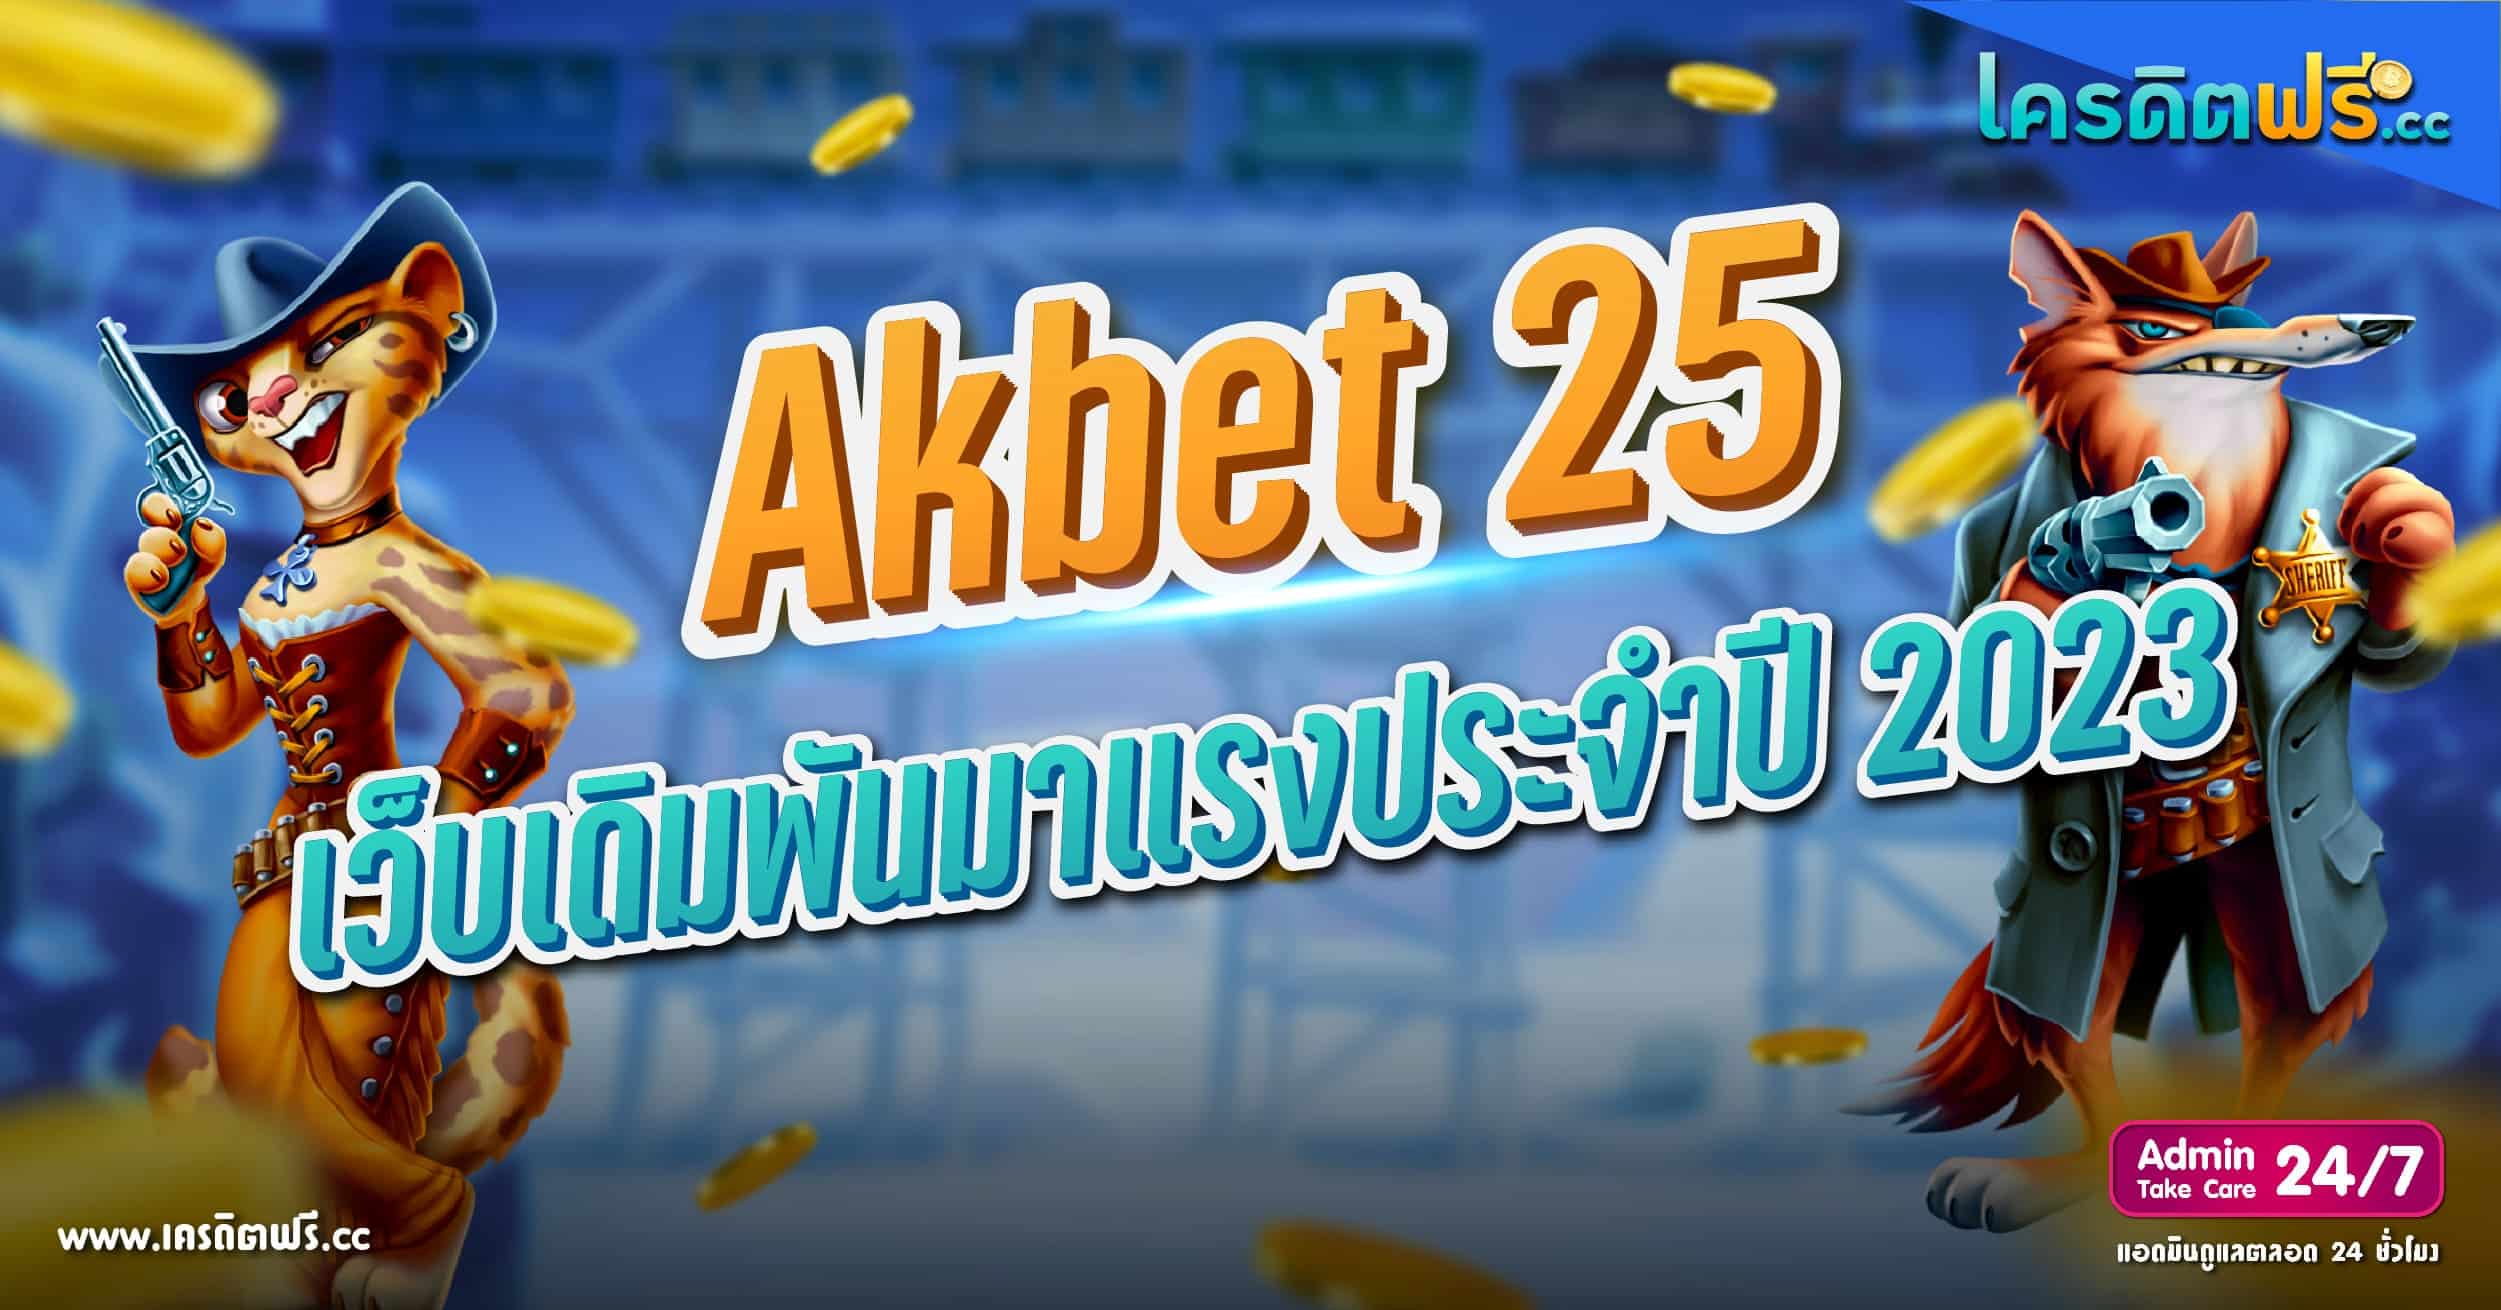 Akbet25